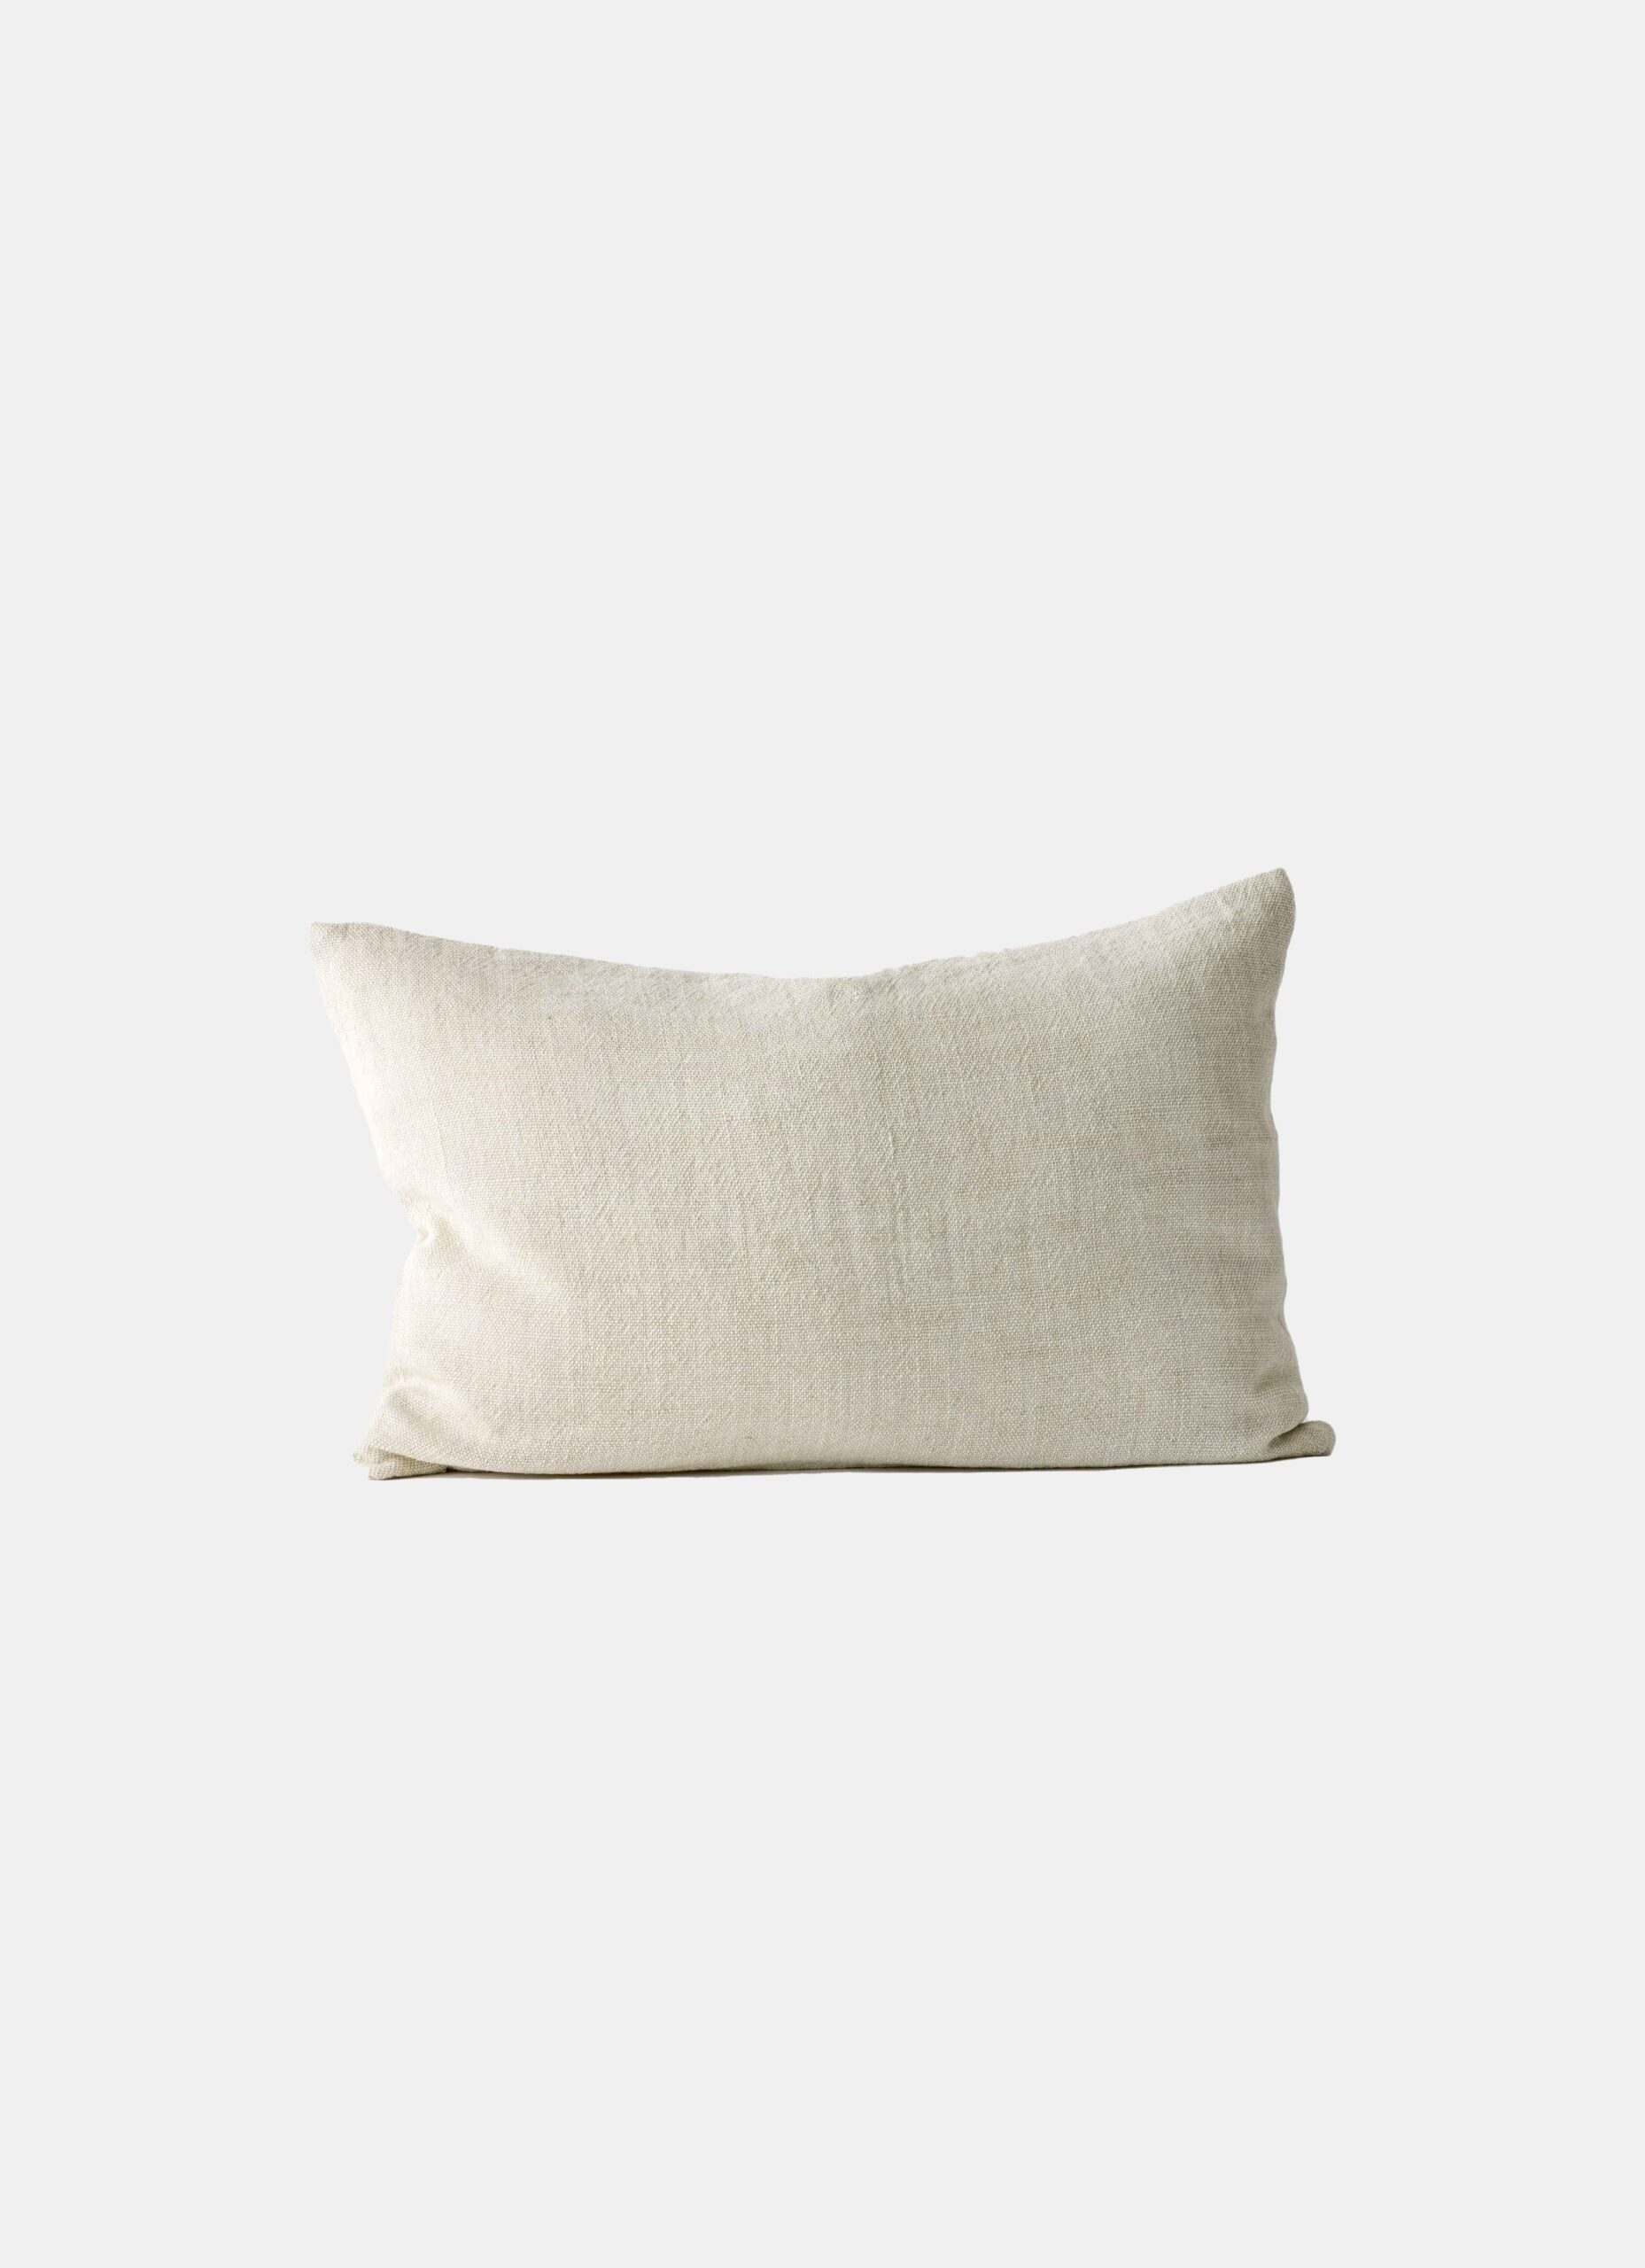 Tell Me More - Hand Woven Linen Cushion - 40x60cm - Wheat